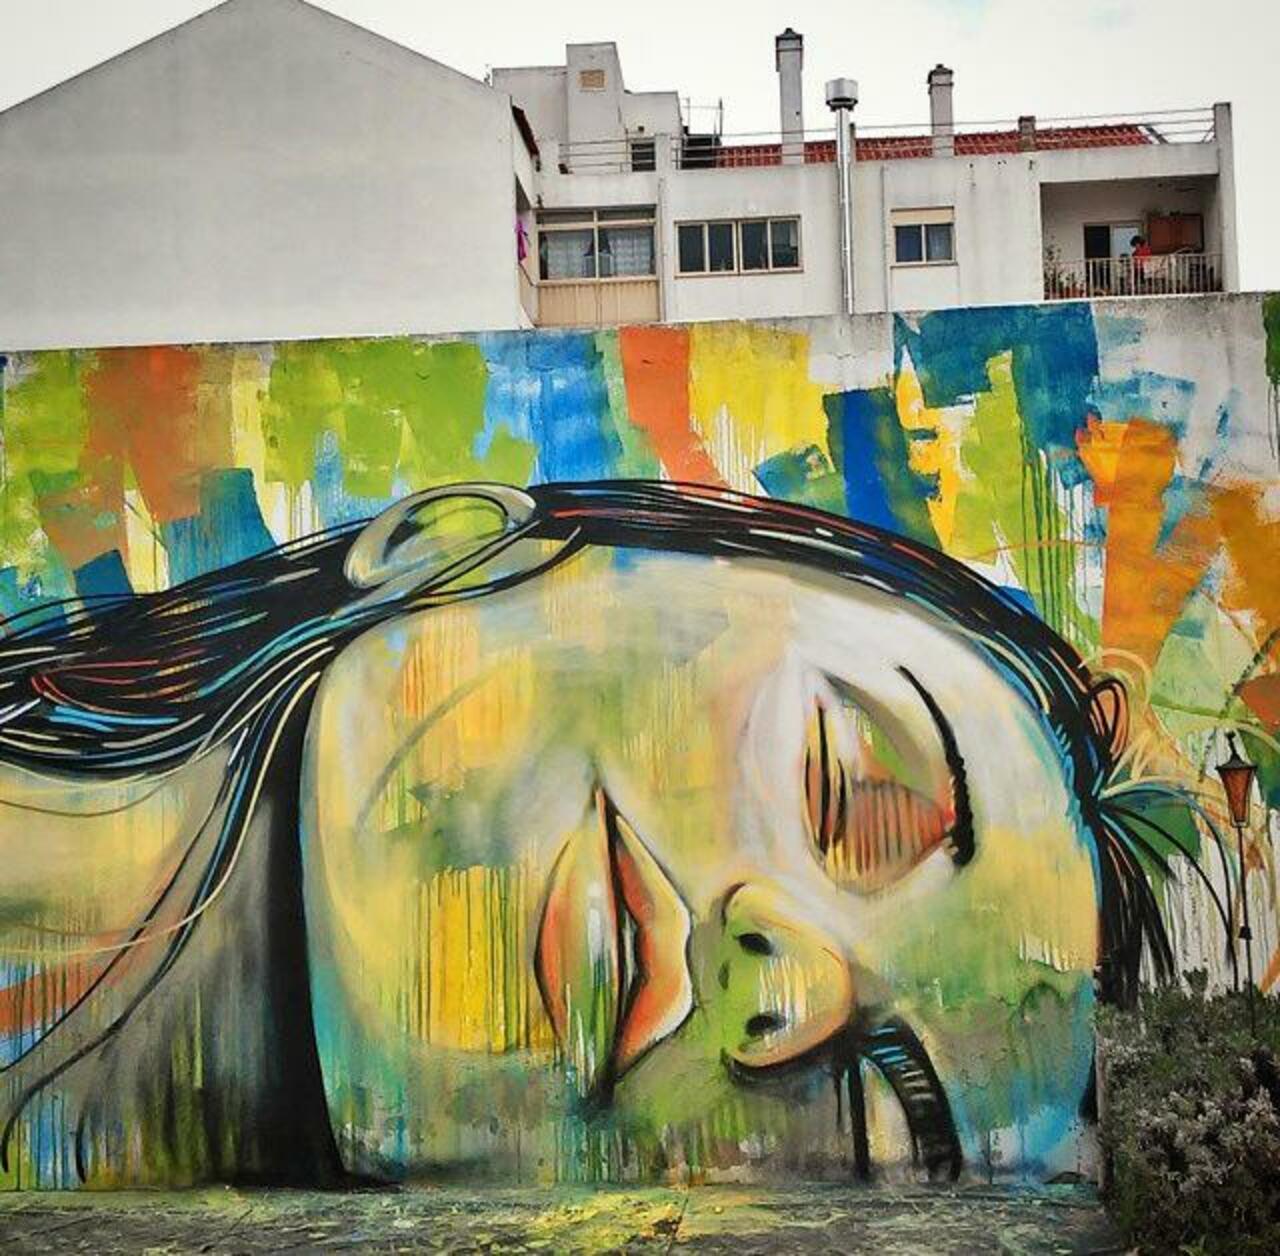 “@GoogleStreetArt: New Street Art wall in Ponte de Sor, Portugal by Alice Pasquini 

#art #arte #graffiti #streetart http://t.co/2myJB0wIsr”